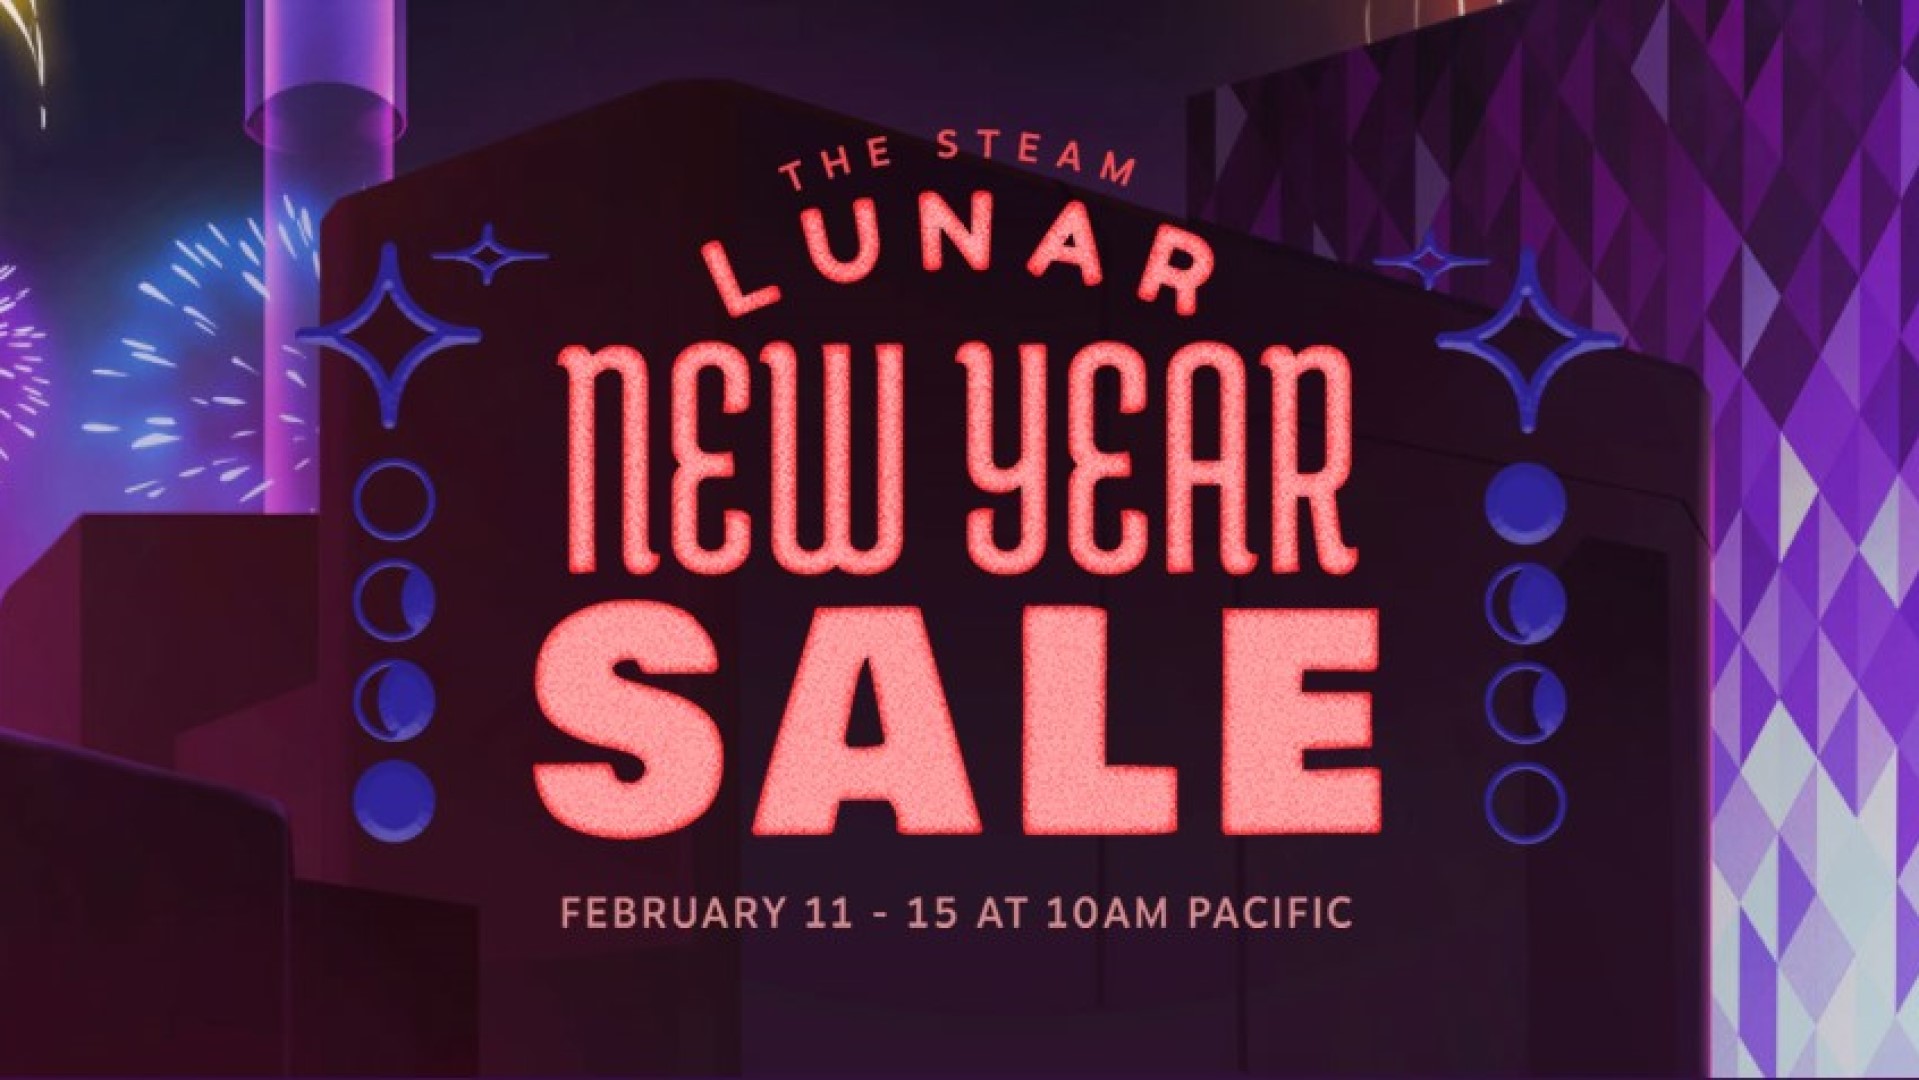 Steam’s Lunar Sale has begun, with bundle deals for CSGO, Dota 2, and